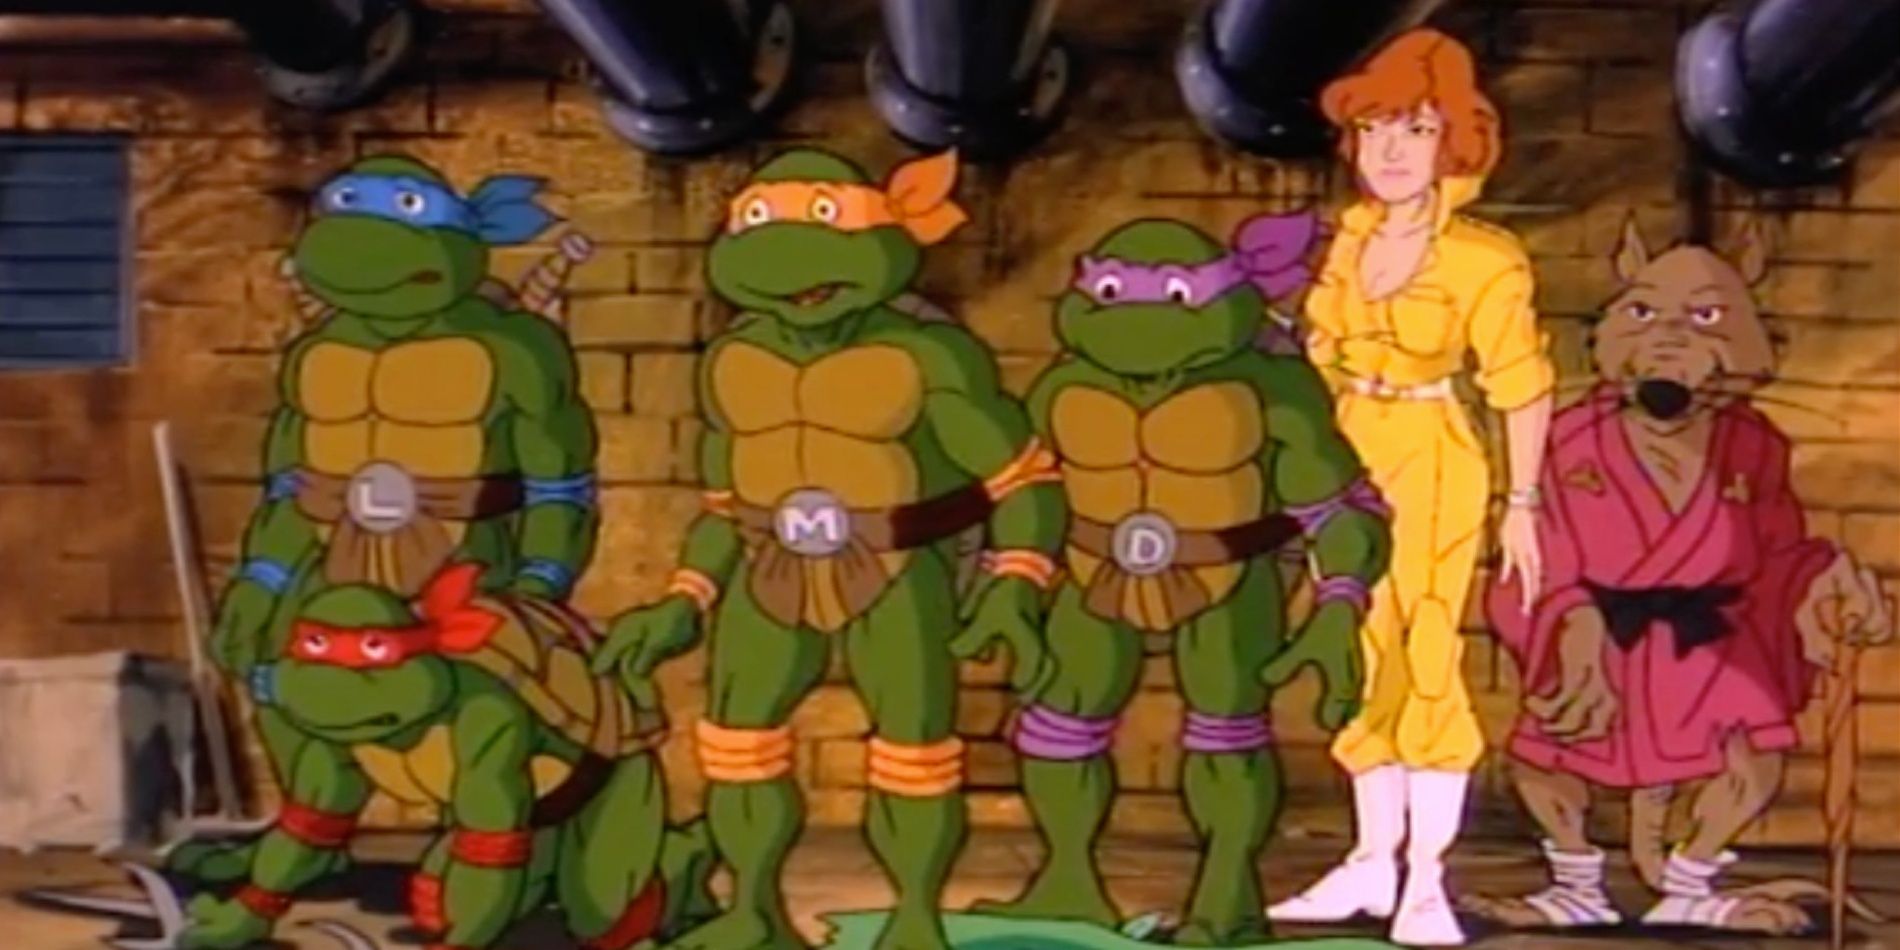 The Turtles, April, and Splinter in Teenage Mutant Ninja Turtles 1987